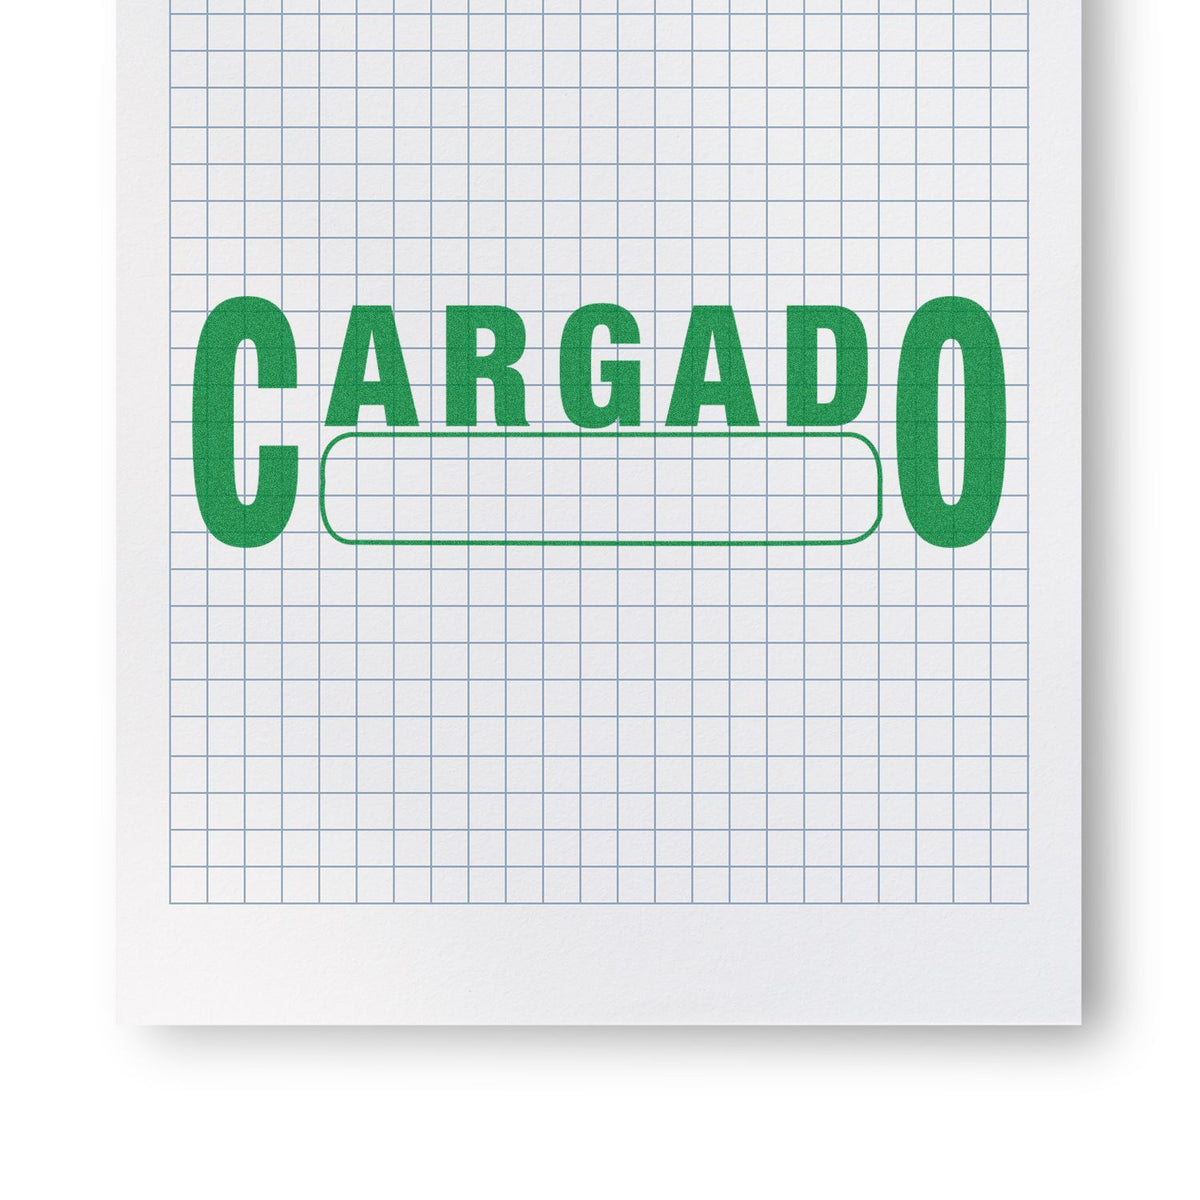 Large Pre-Inked Cargado Stamp In Use